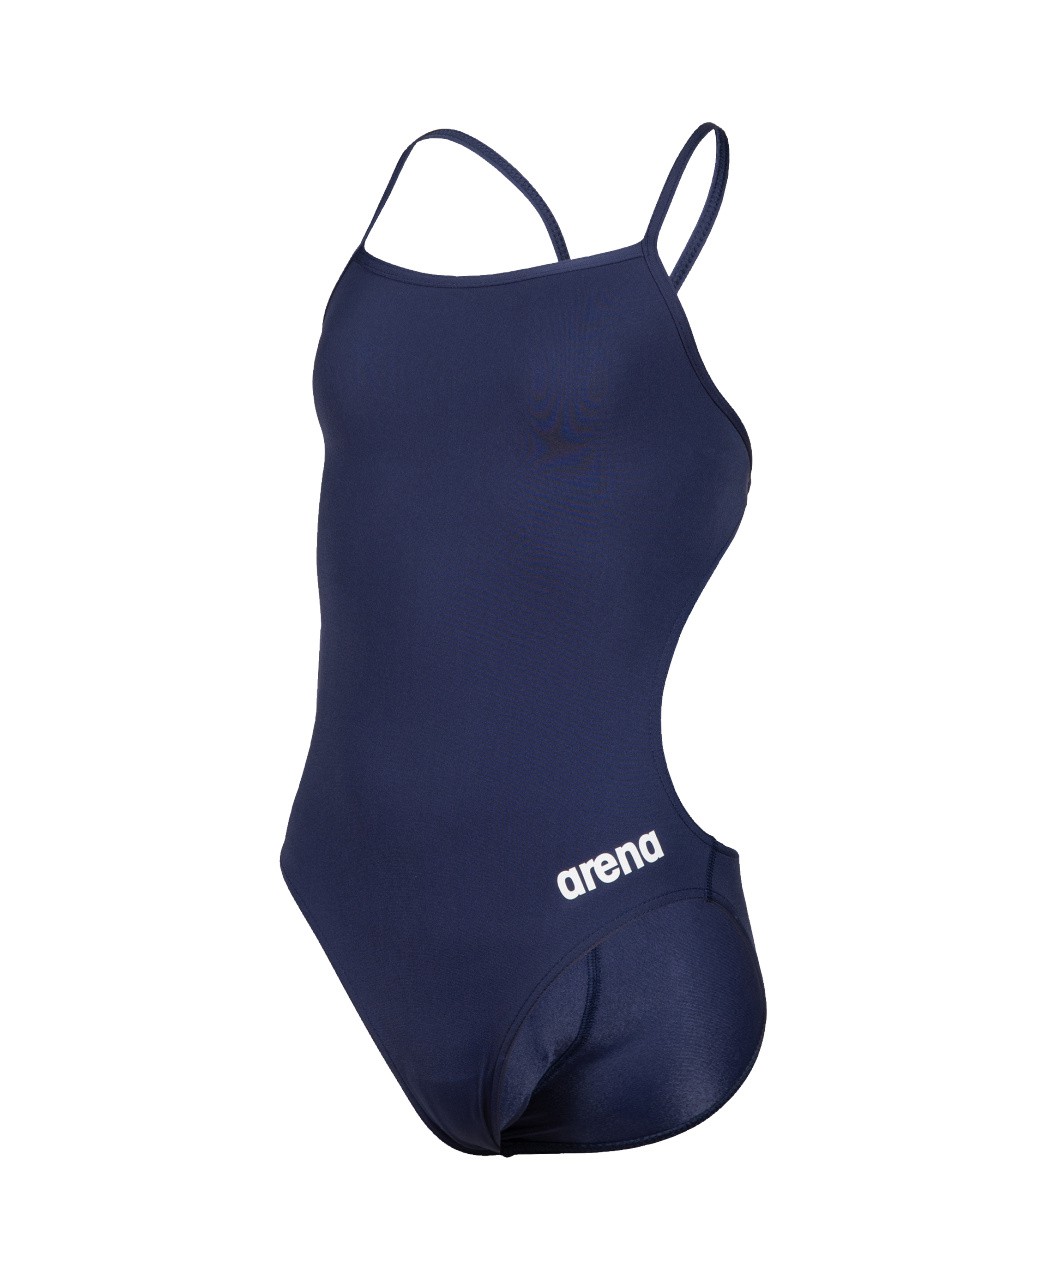 G Team Swimsuit Challenge Solid